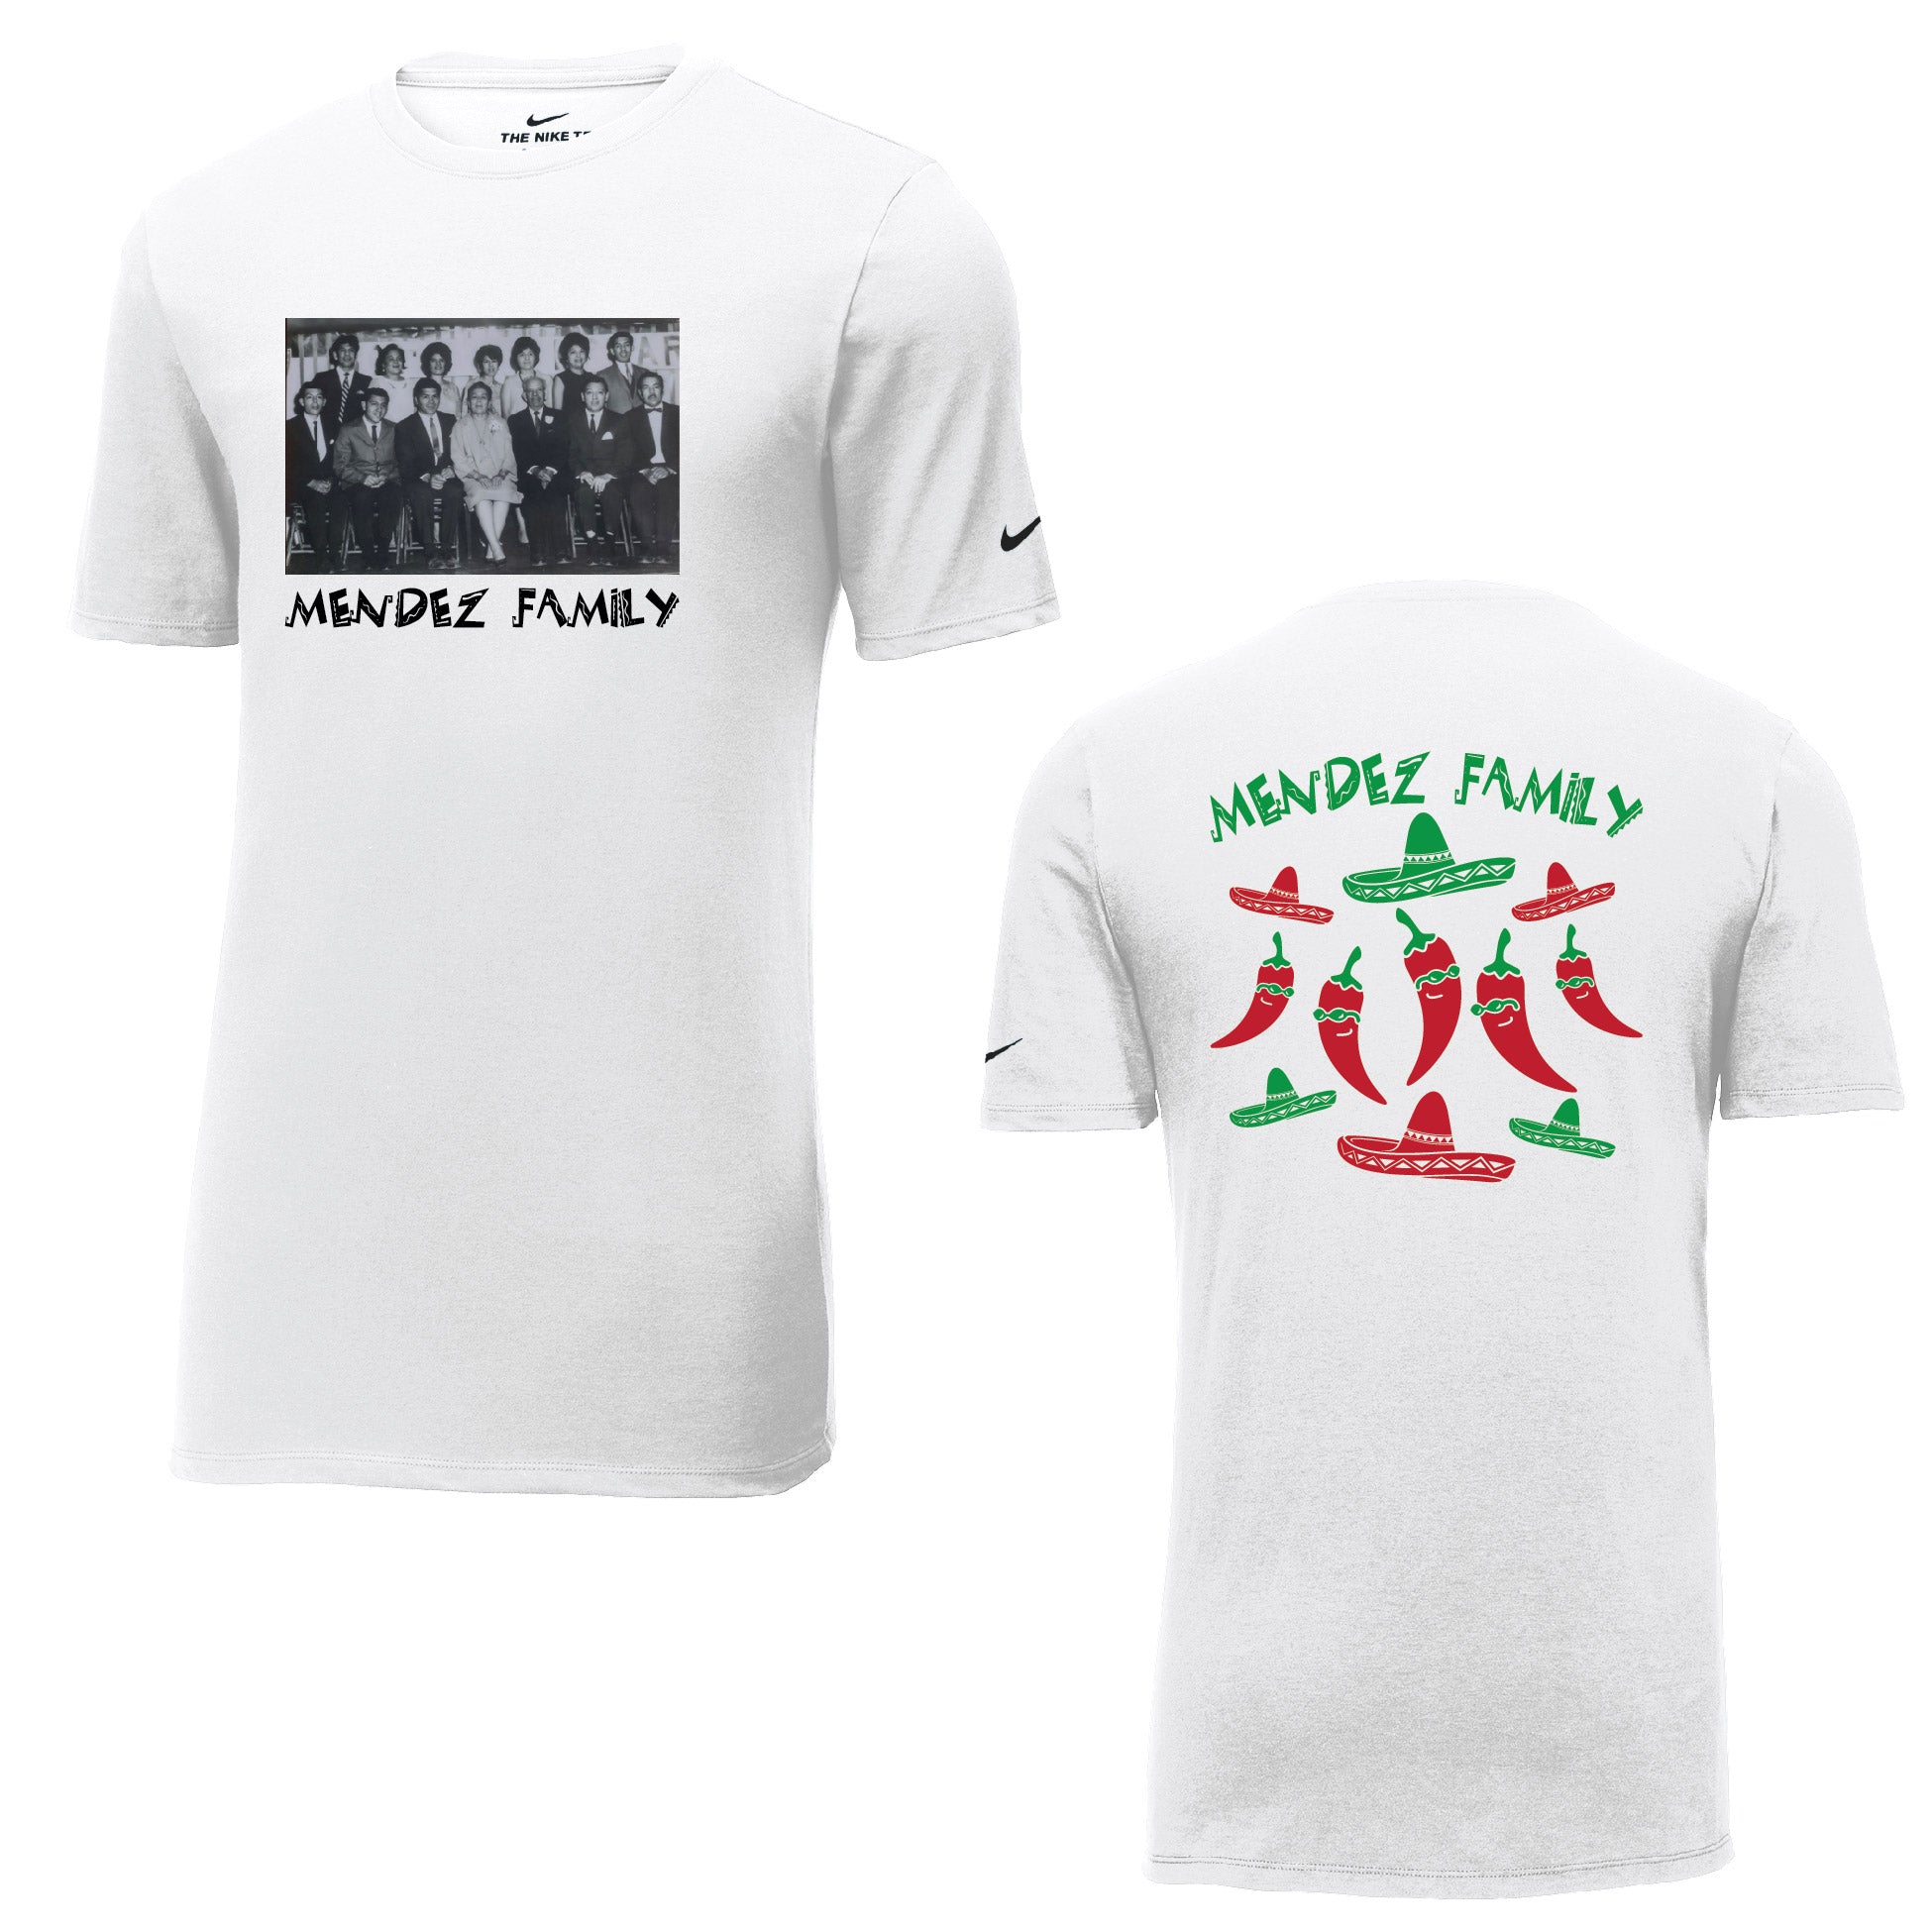 Mendez Family Nike Cotton/Poly T-Shirt